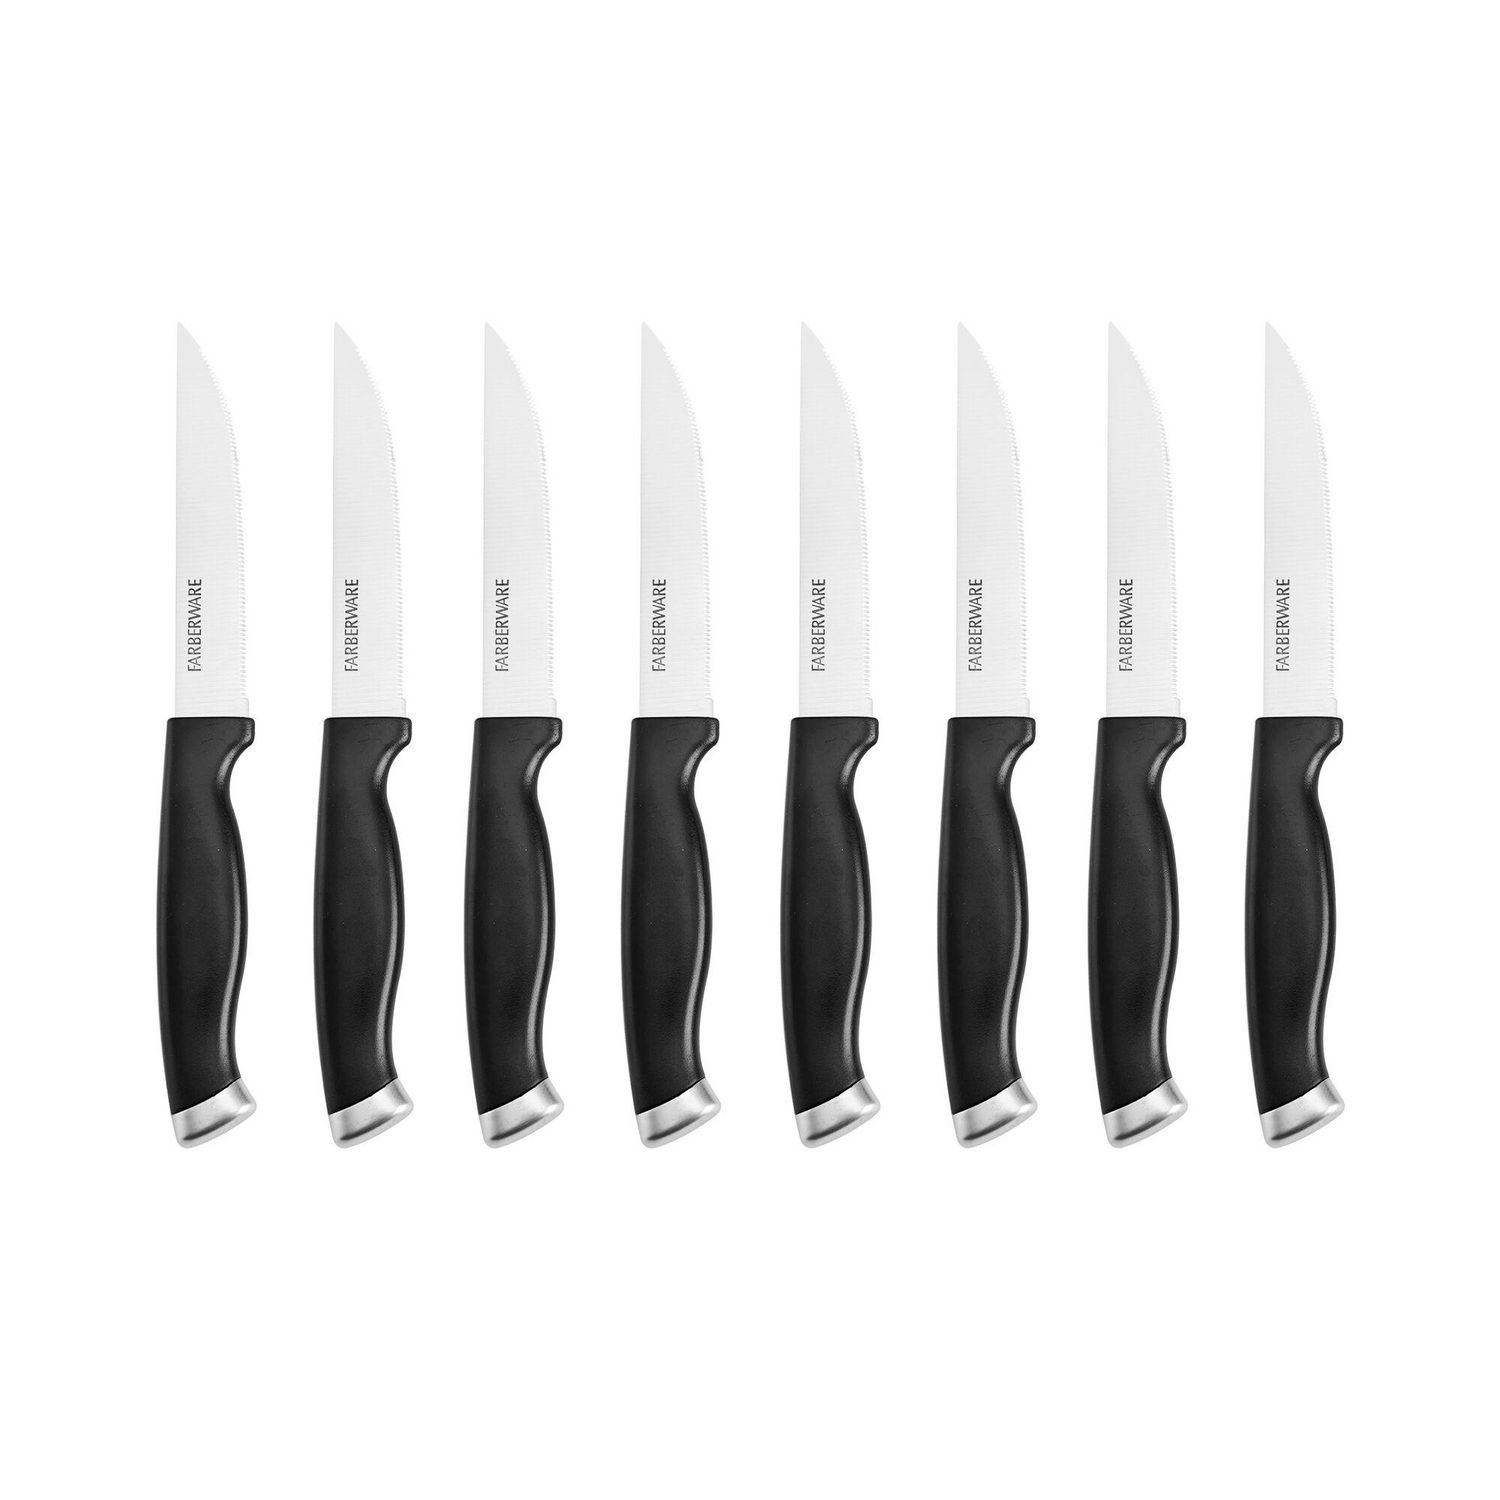 Farberware Soft Grip Cutlery Set